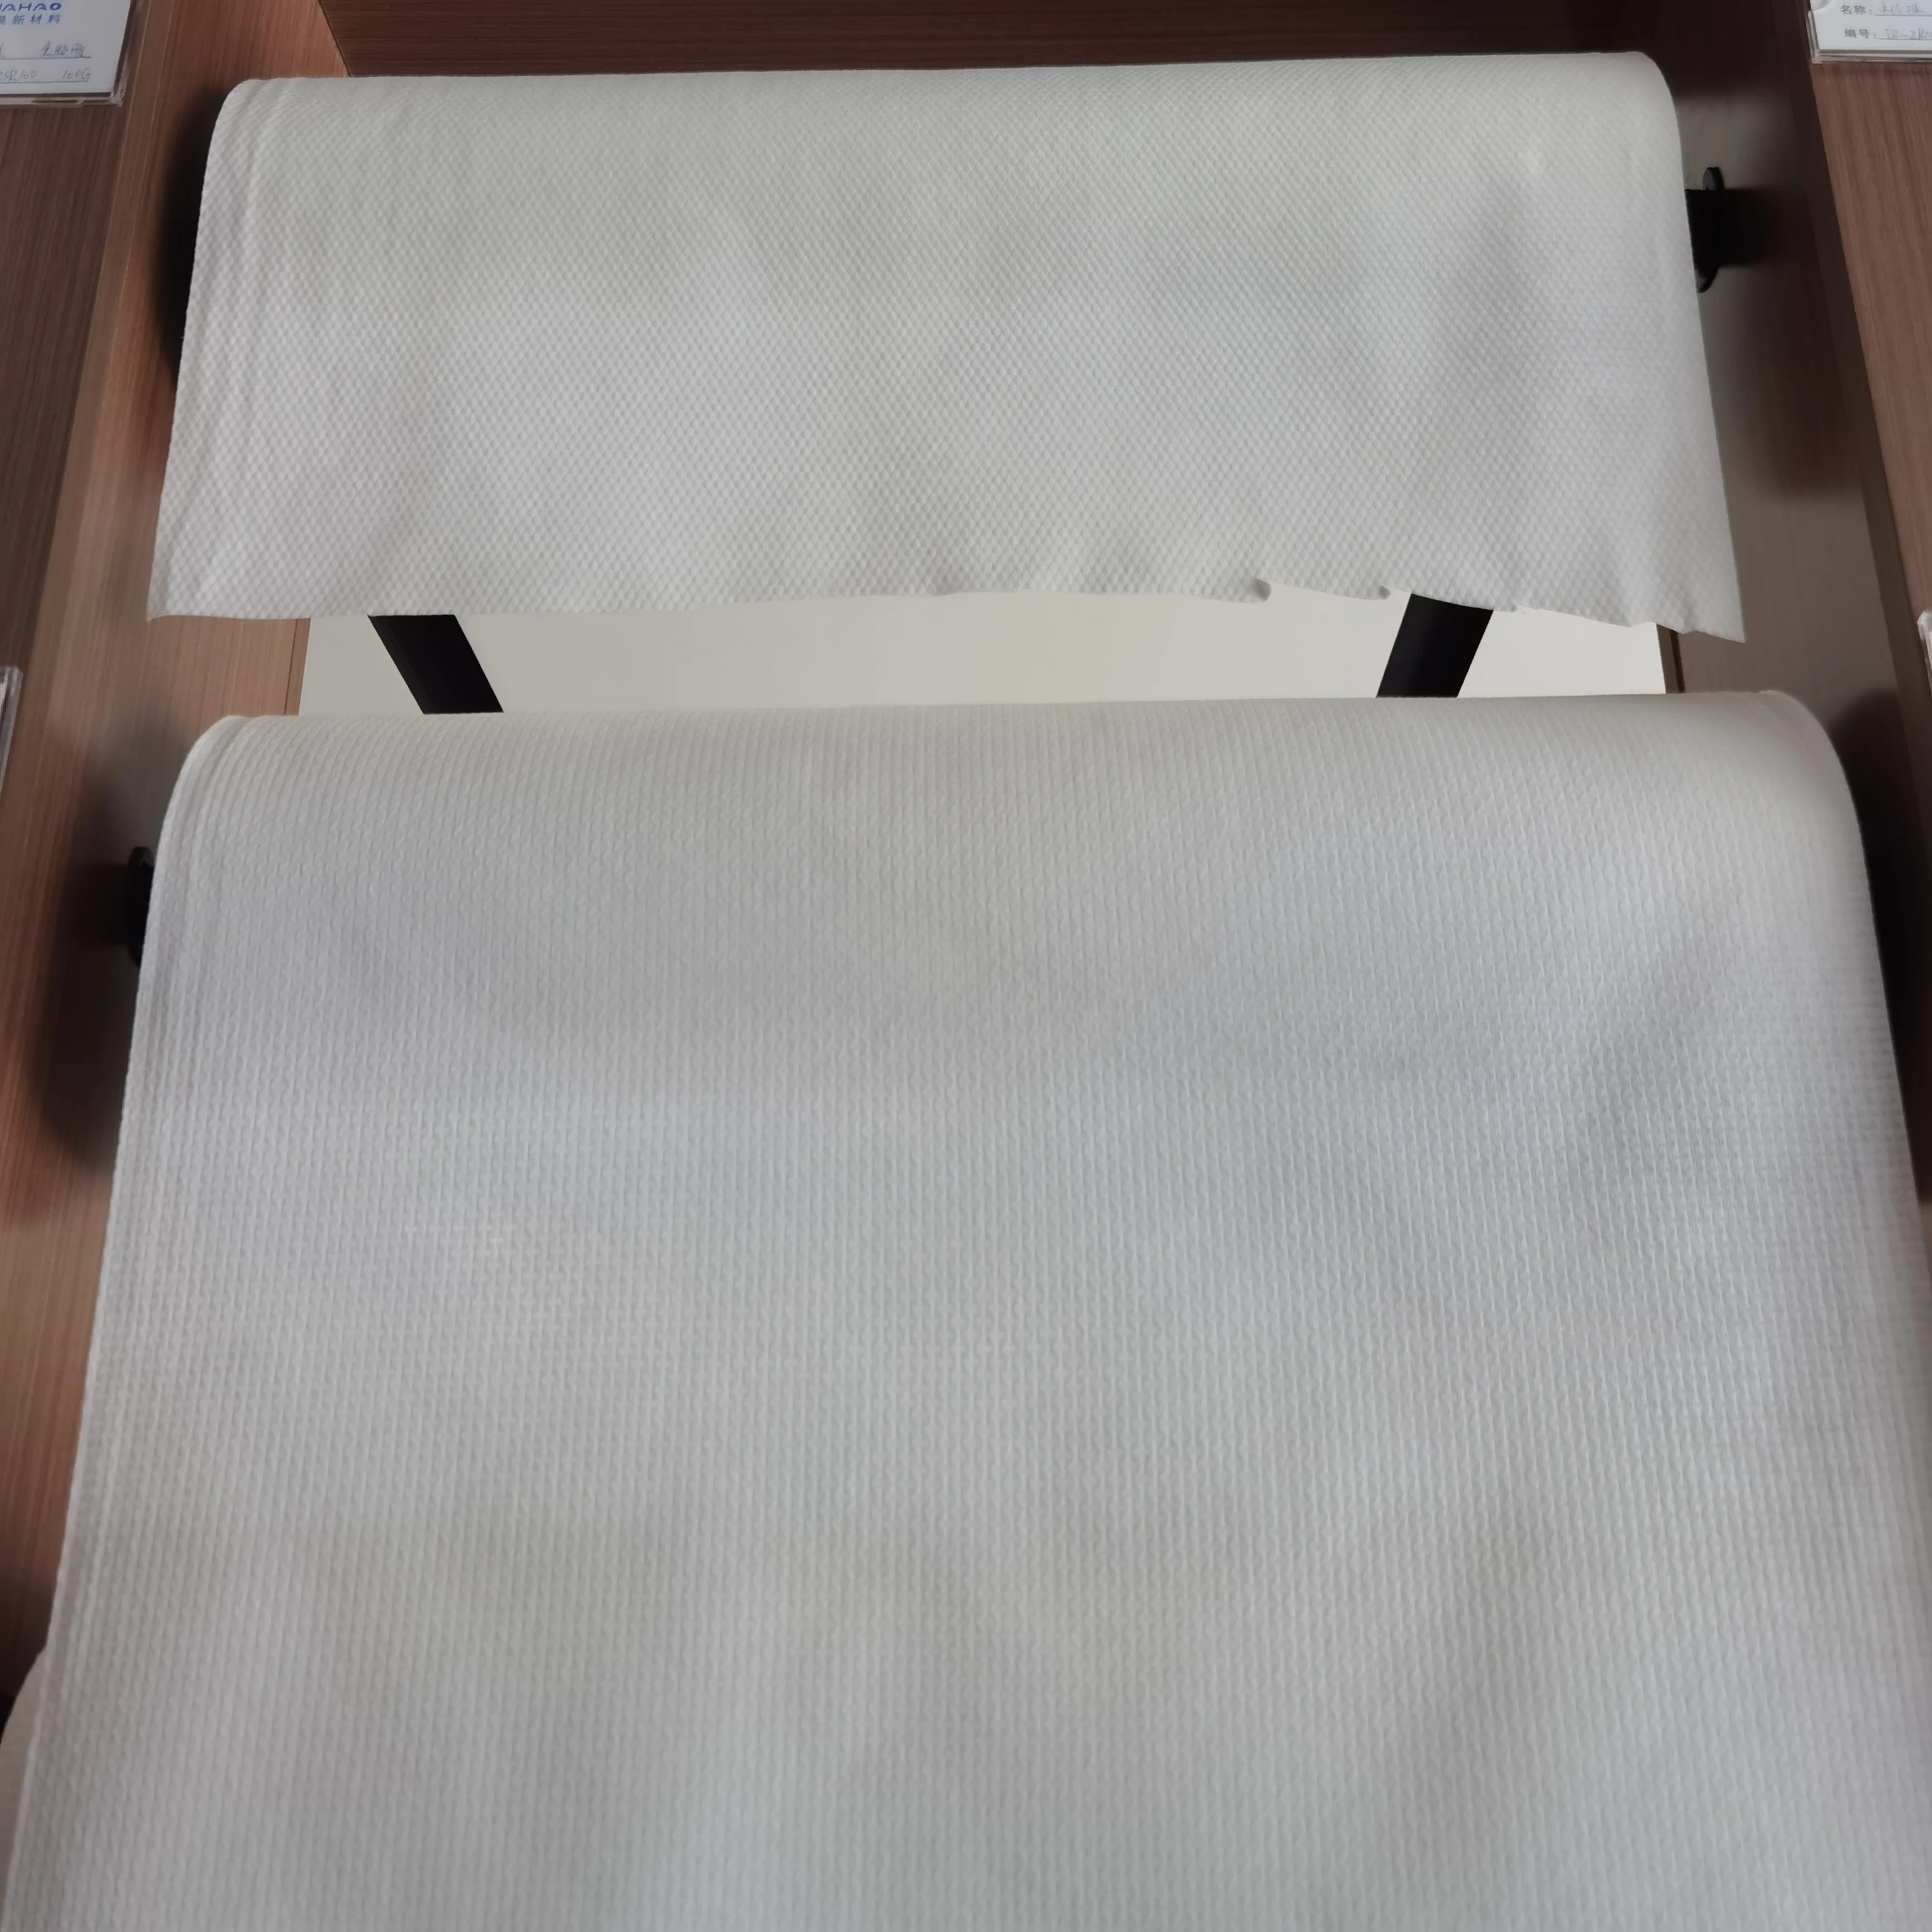 PLA Viscose Spunlance Non woven Semi Cross EF Spunlace Nonwoven Fabric for Hospital Surgical Medical